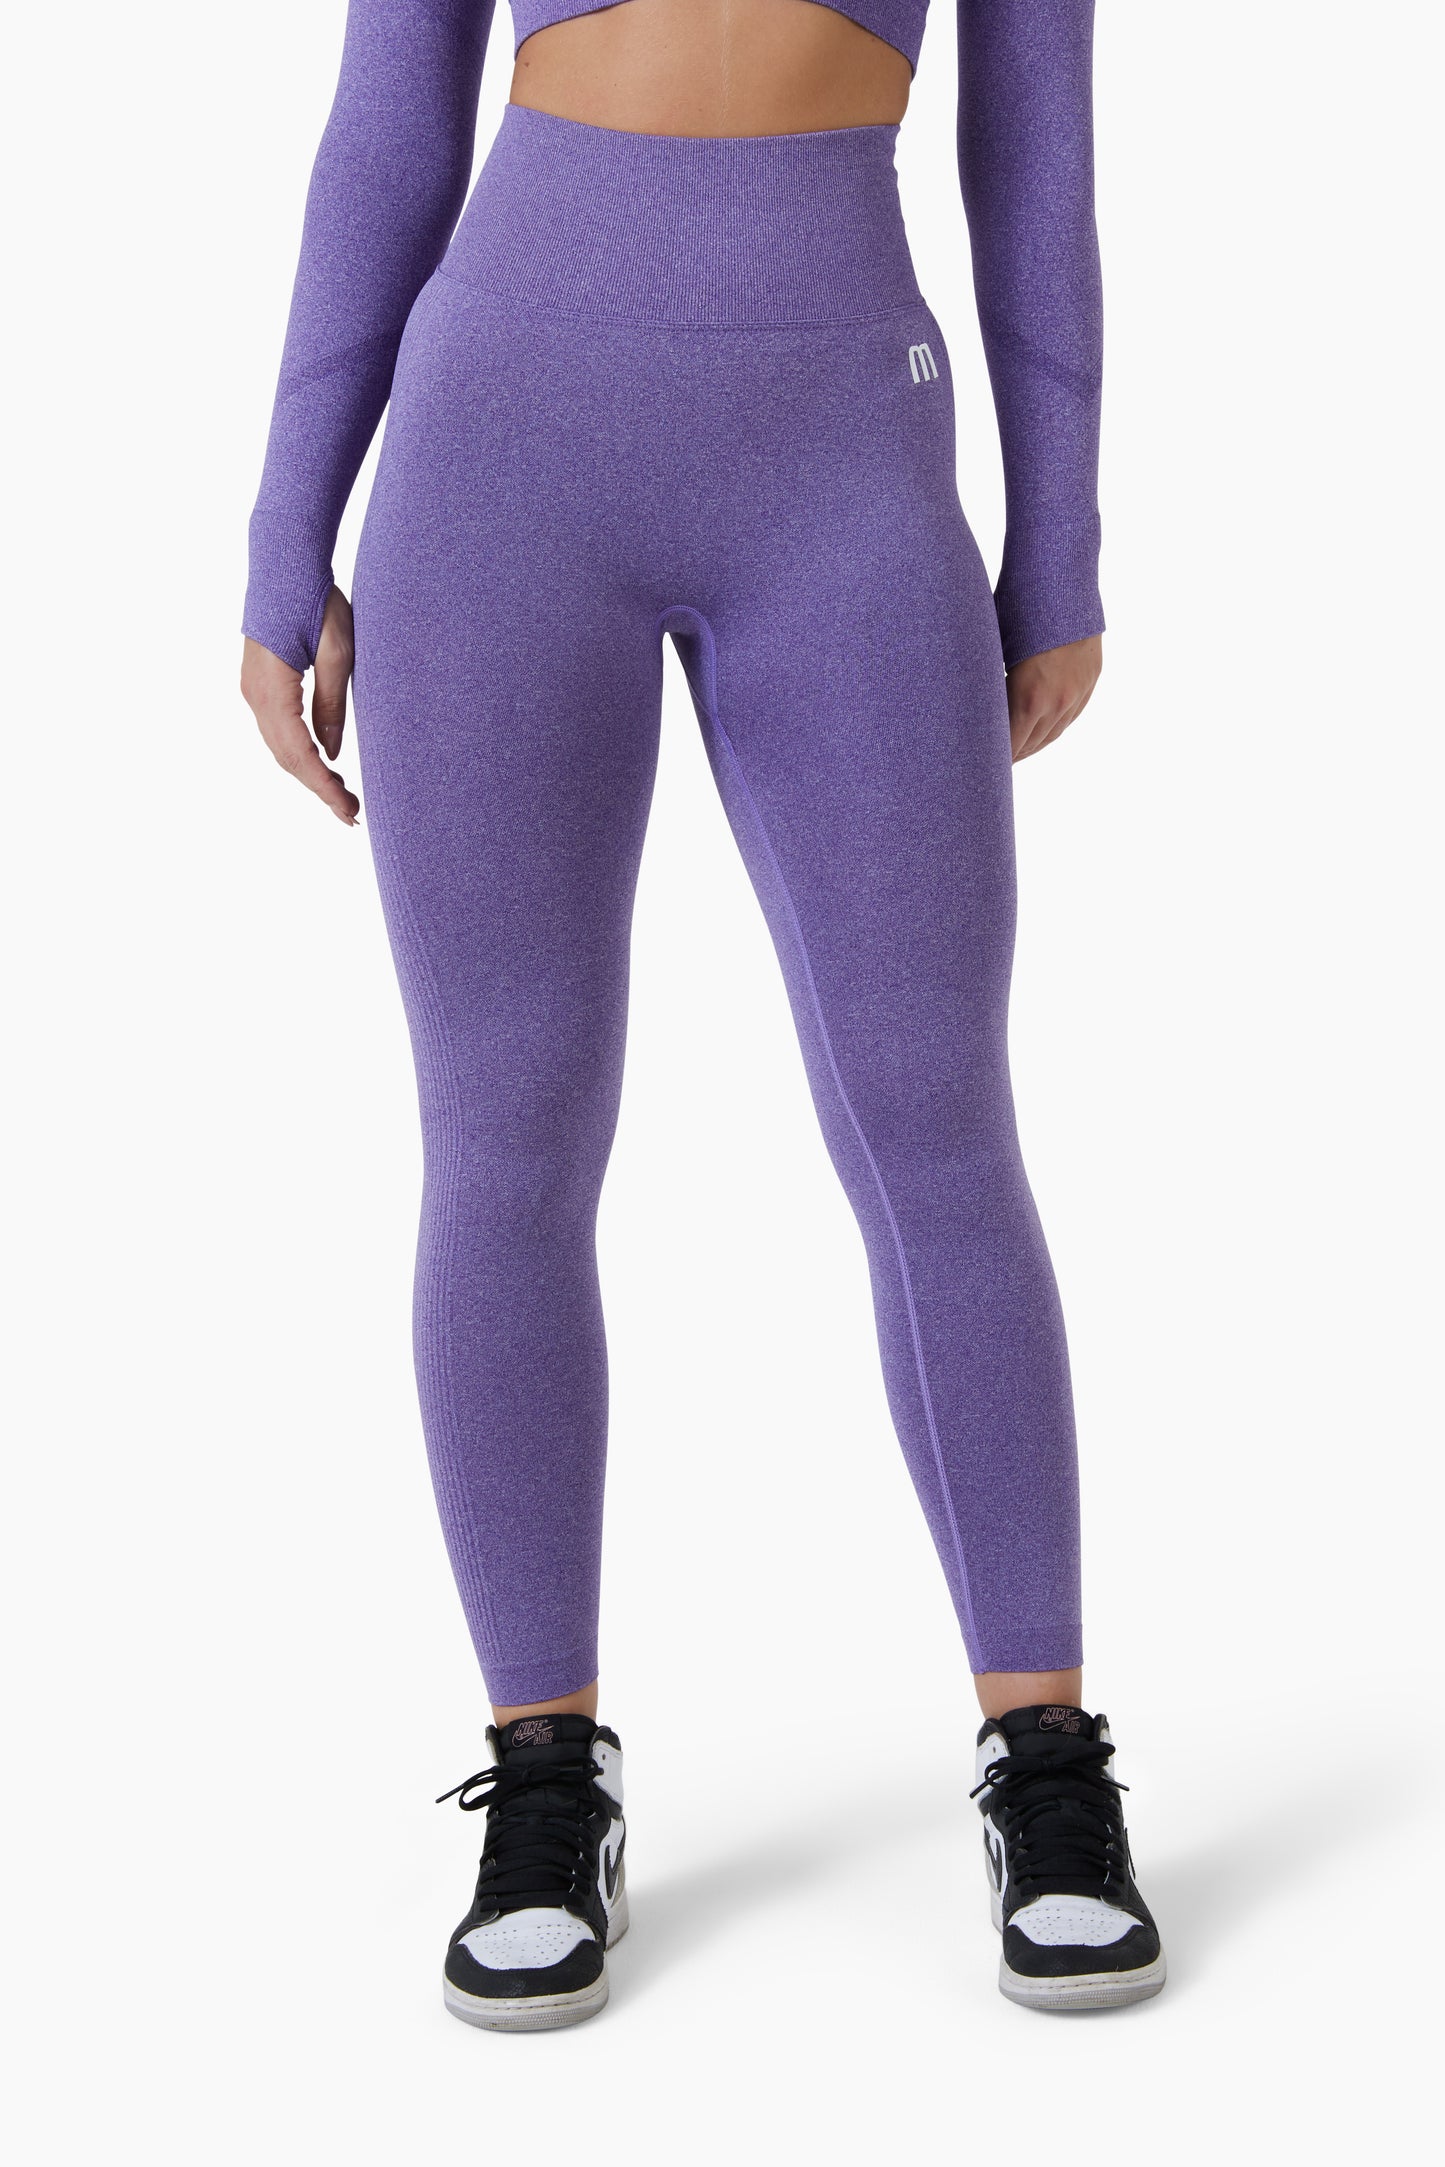 Legging seamless shape purple